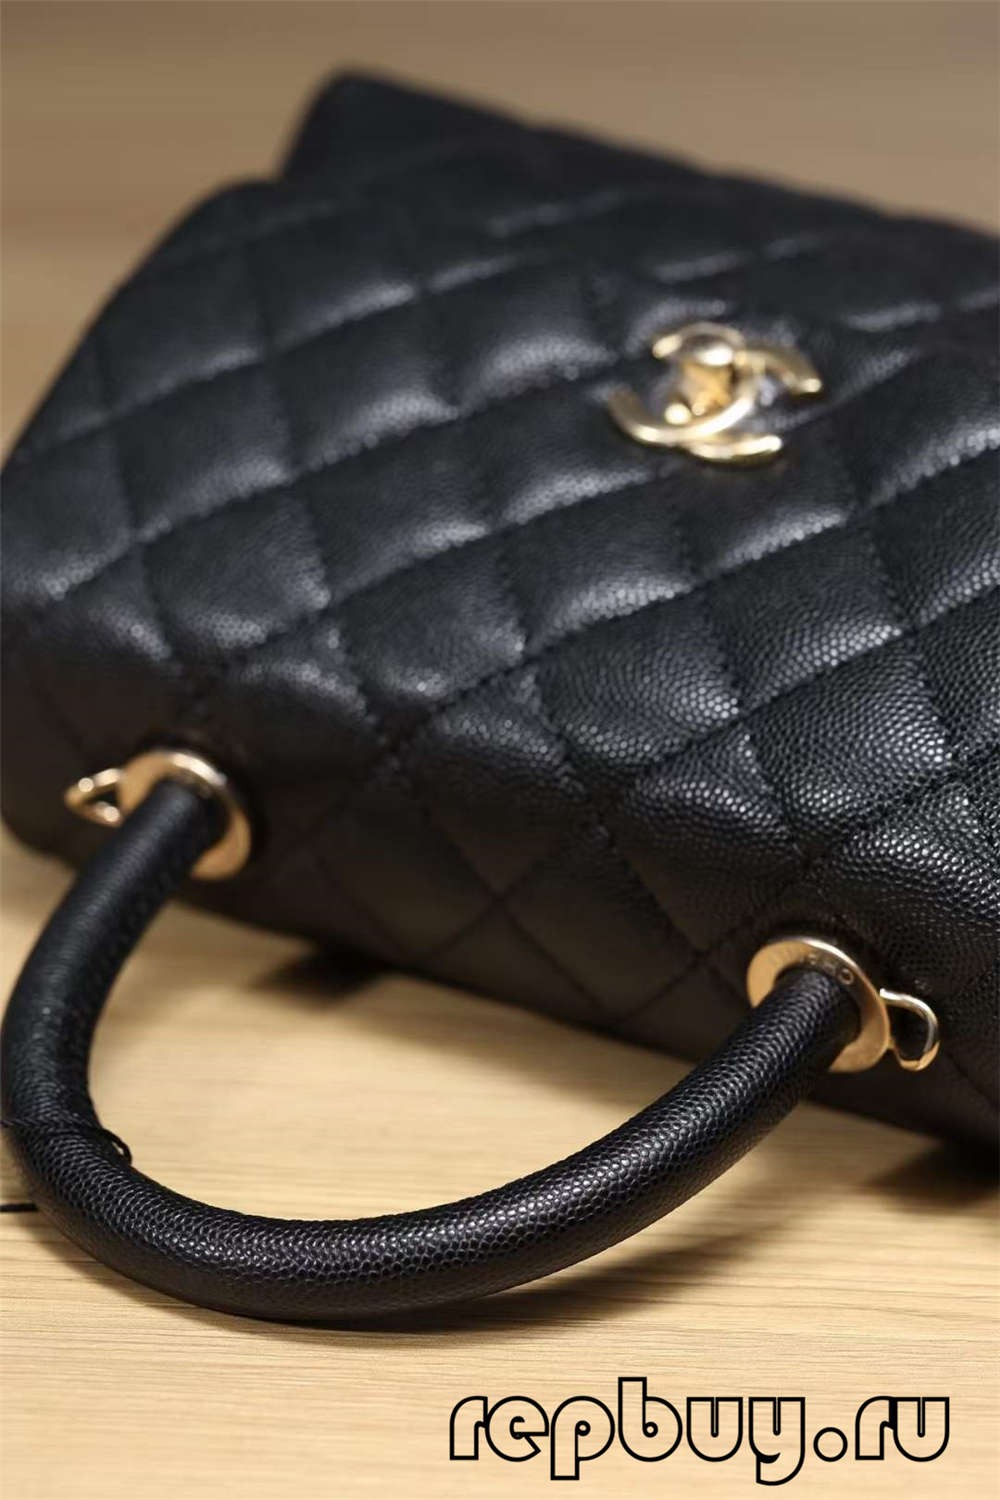 Chanel Coco Handle Top Replica Handtasche Schwarz Gold Buckle Look (2022 aktualisiert)-Beste Qualität Fake Louis Vuitton Bag Online Store, Replica Designer Bag ru